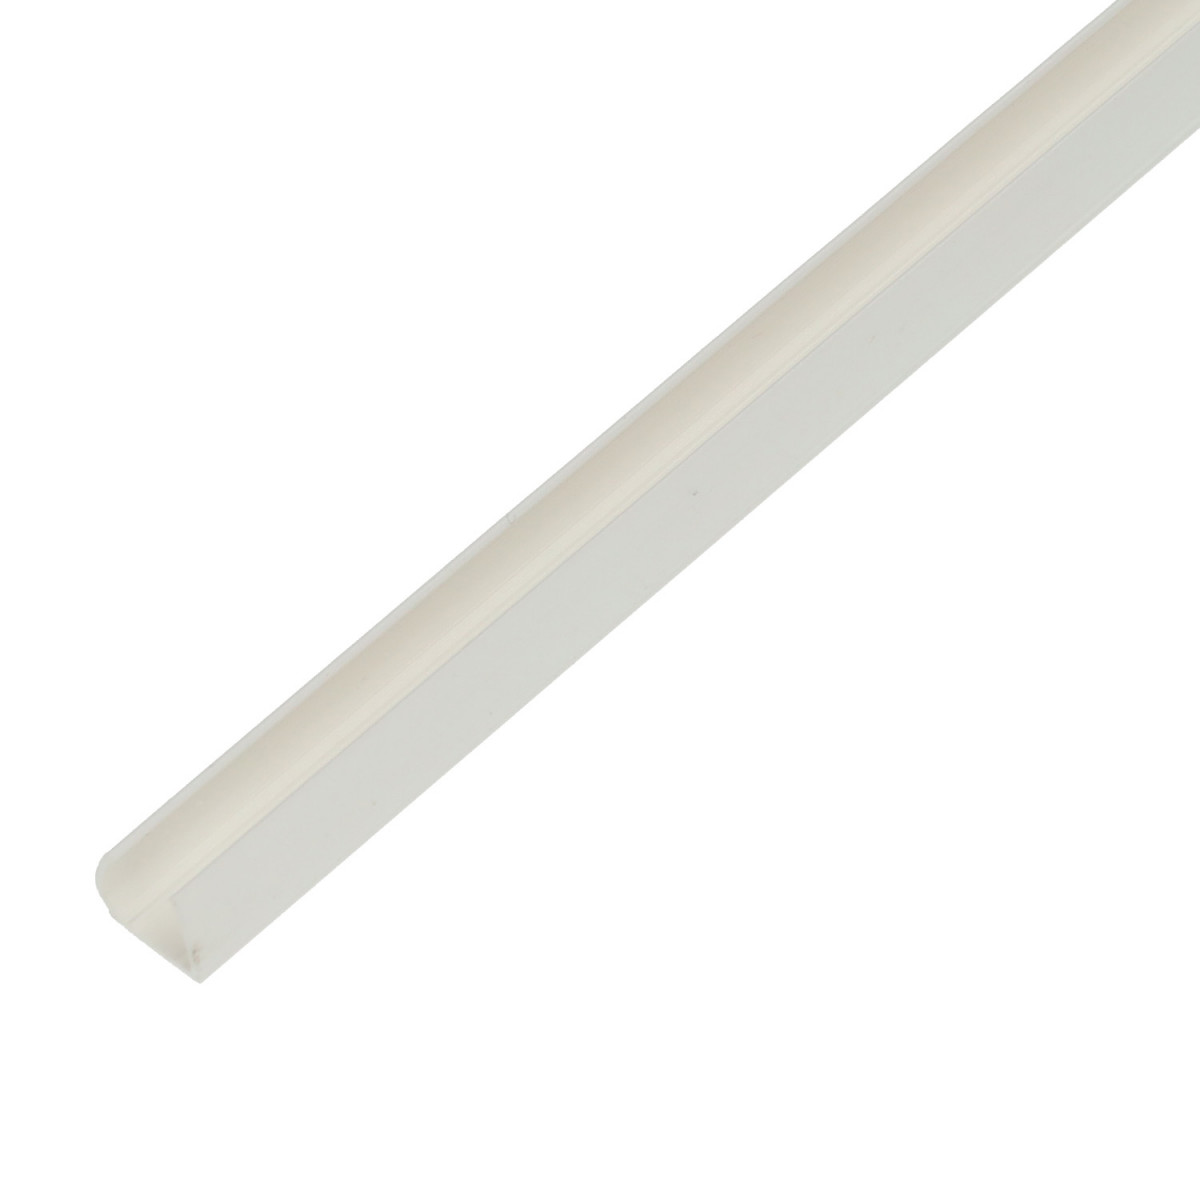 Profile for 1 m neon flex Strips - PVC